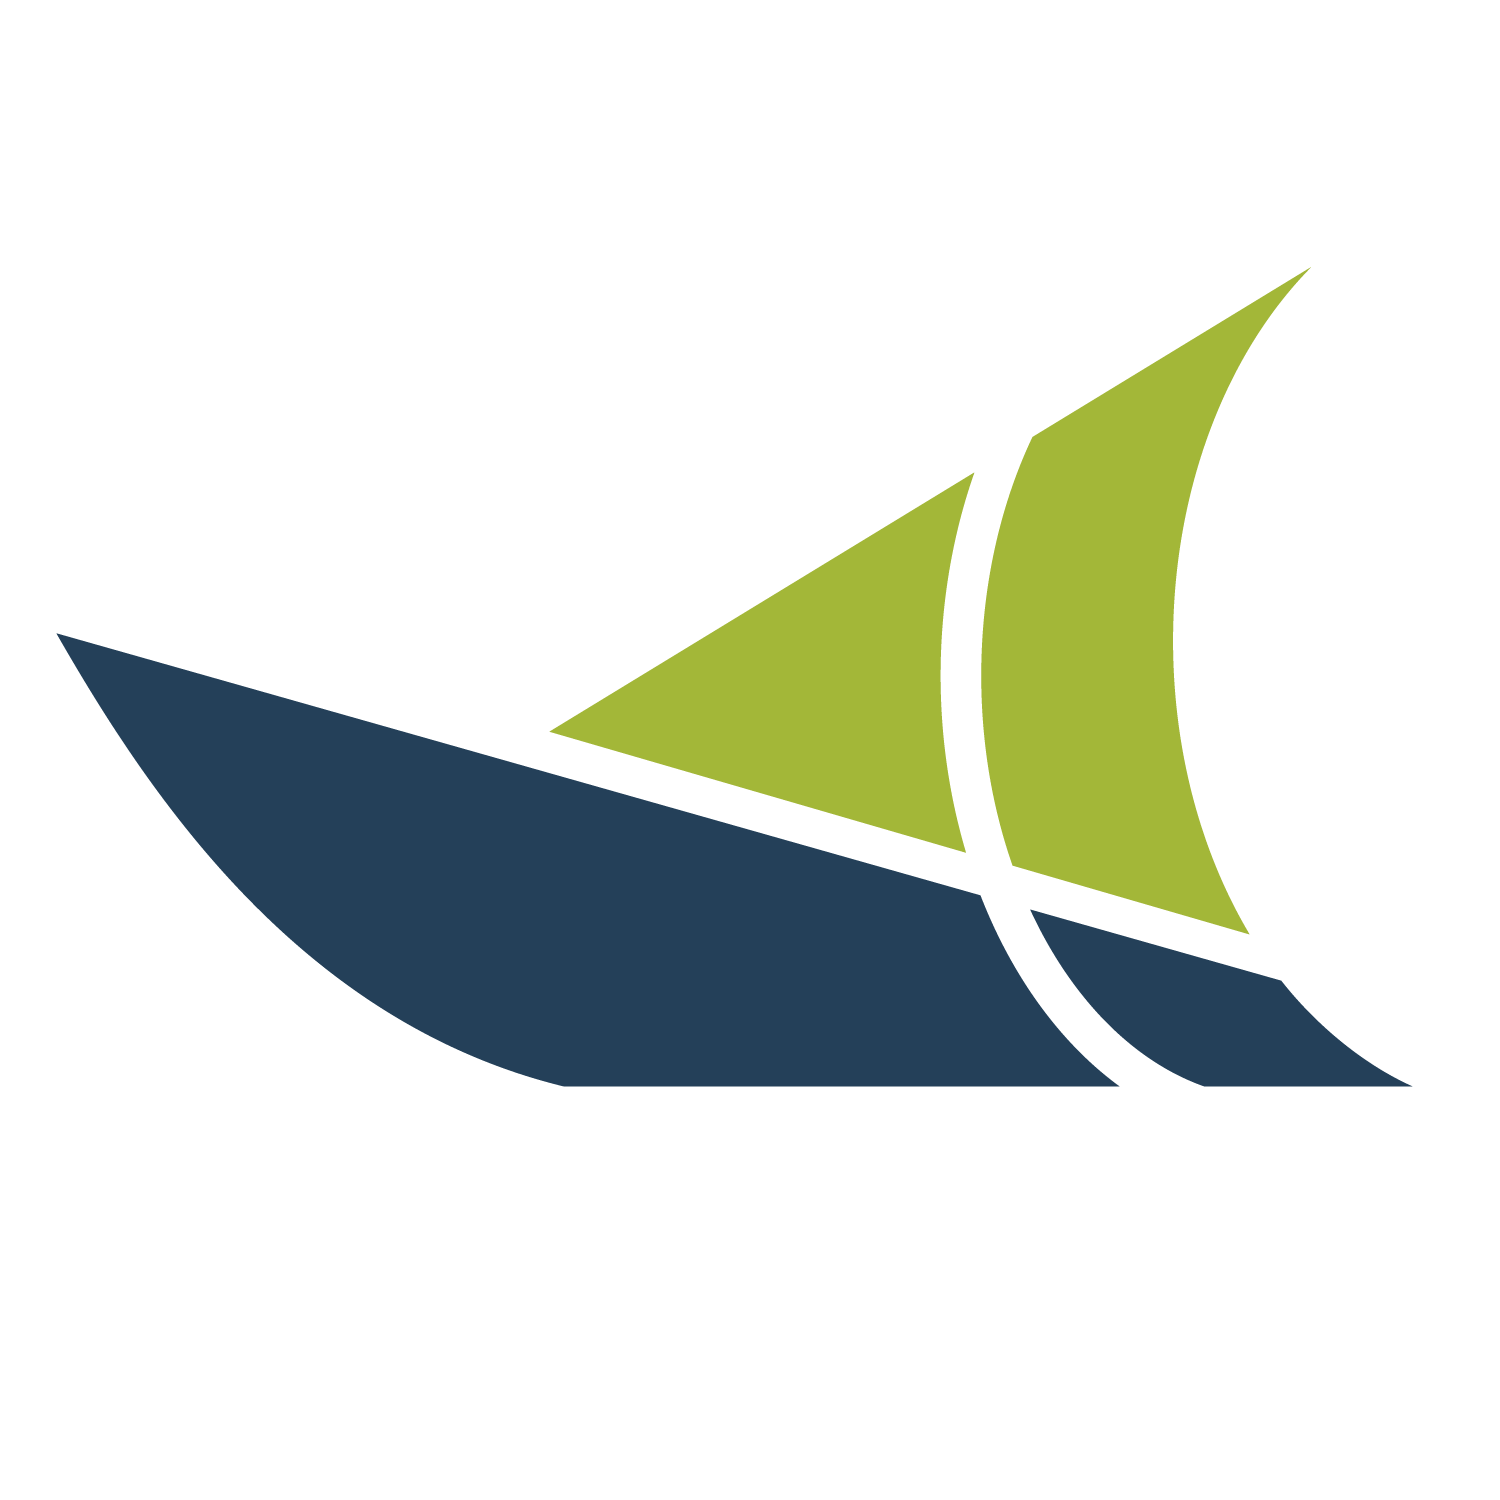 Commonwealth Capital Logo